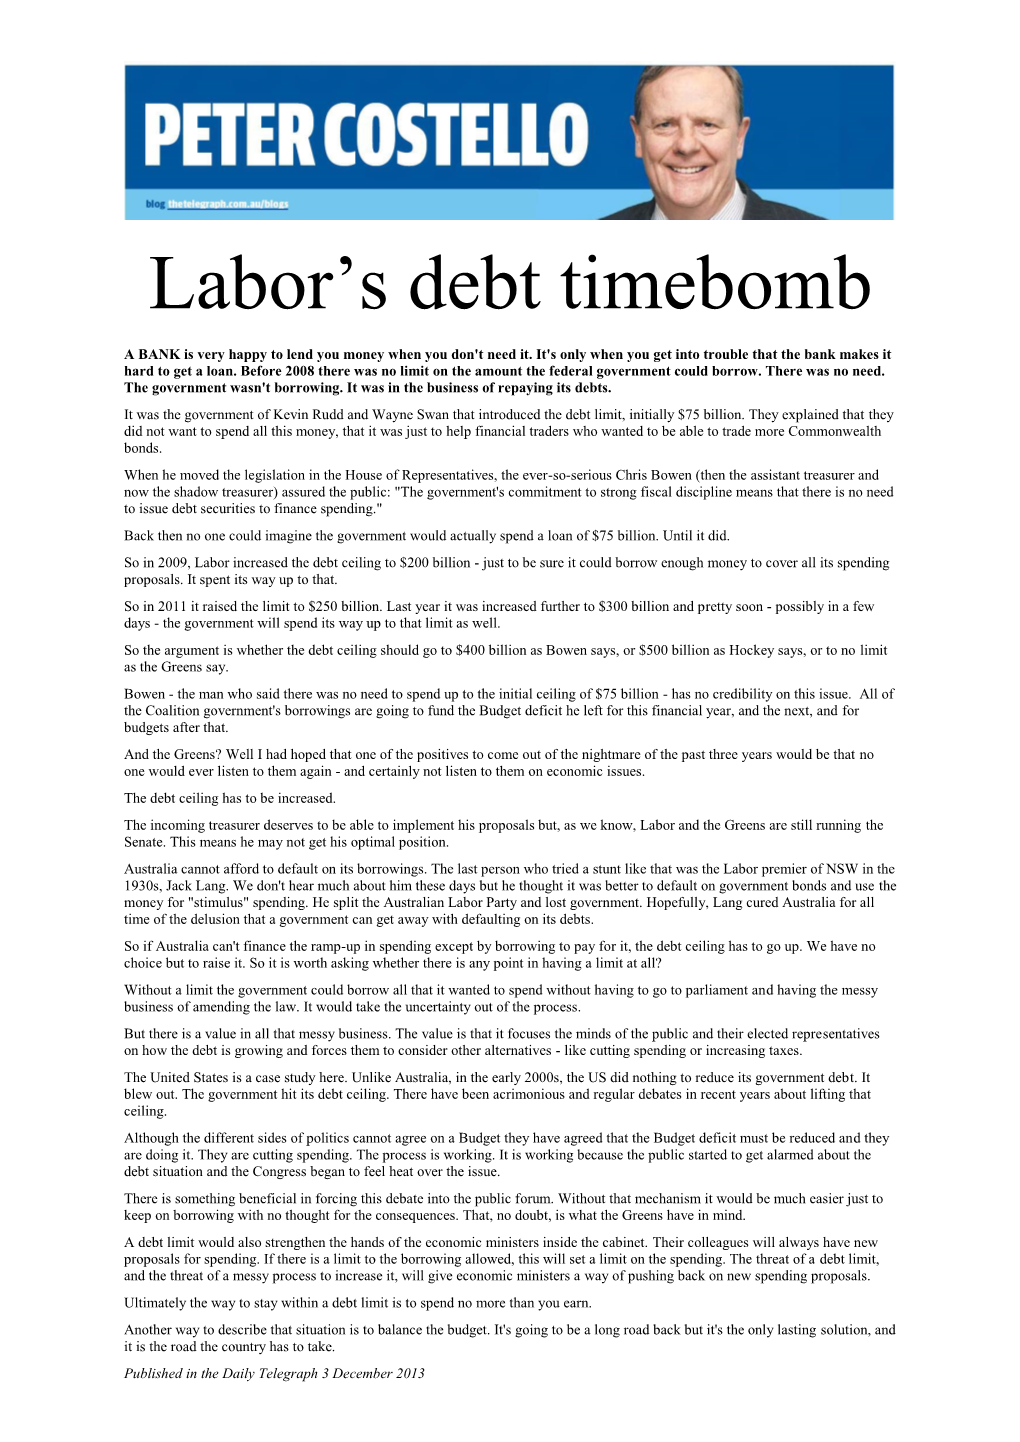 Labor's Debt Timebomb